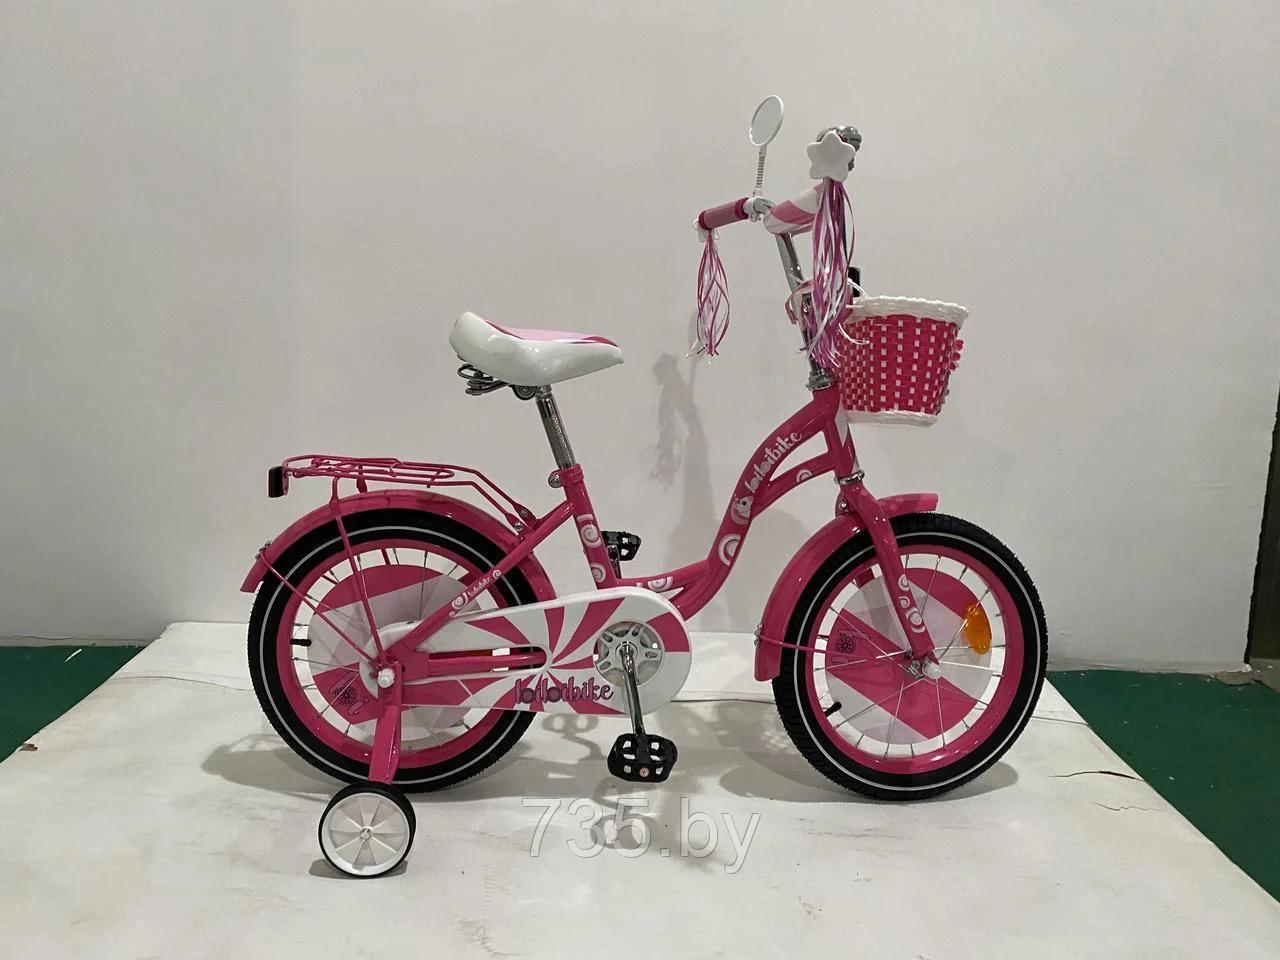 Детский велосипед Bibibike 20", для девочек, корзина, звонок, зеркало, багажник D20 - 1M